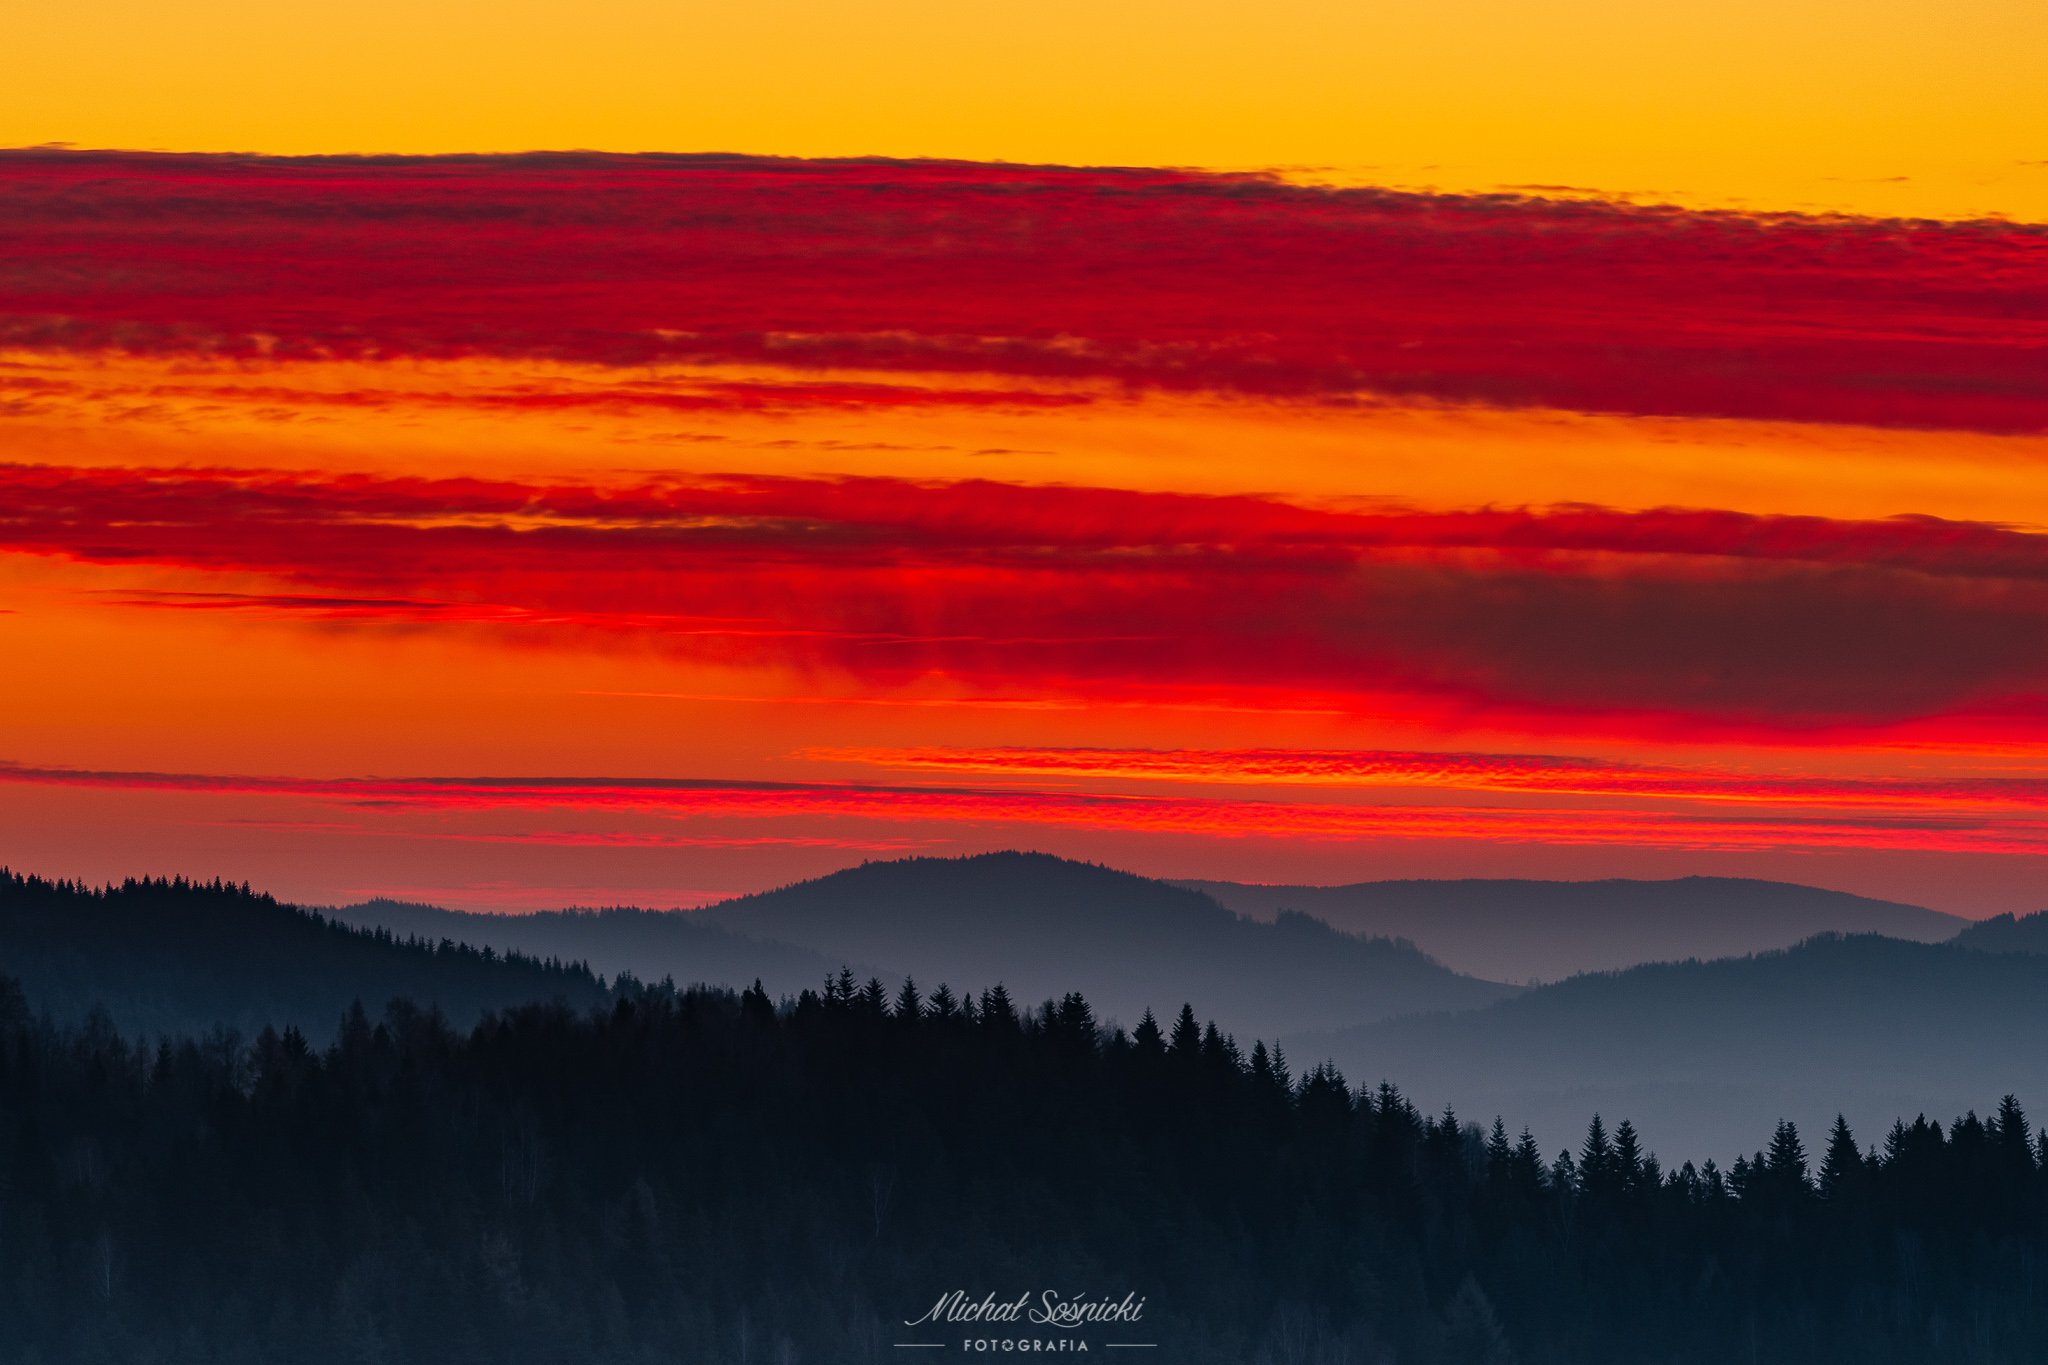 #today #sunrise #mountains #color #pentax #benro #zawoja #poland #sky #fire, Michał Sośnicki